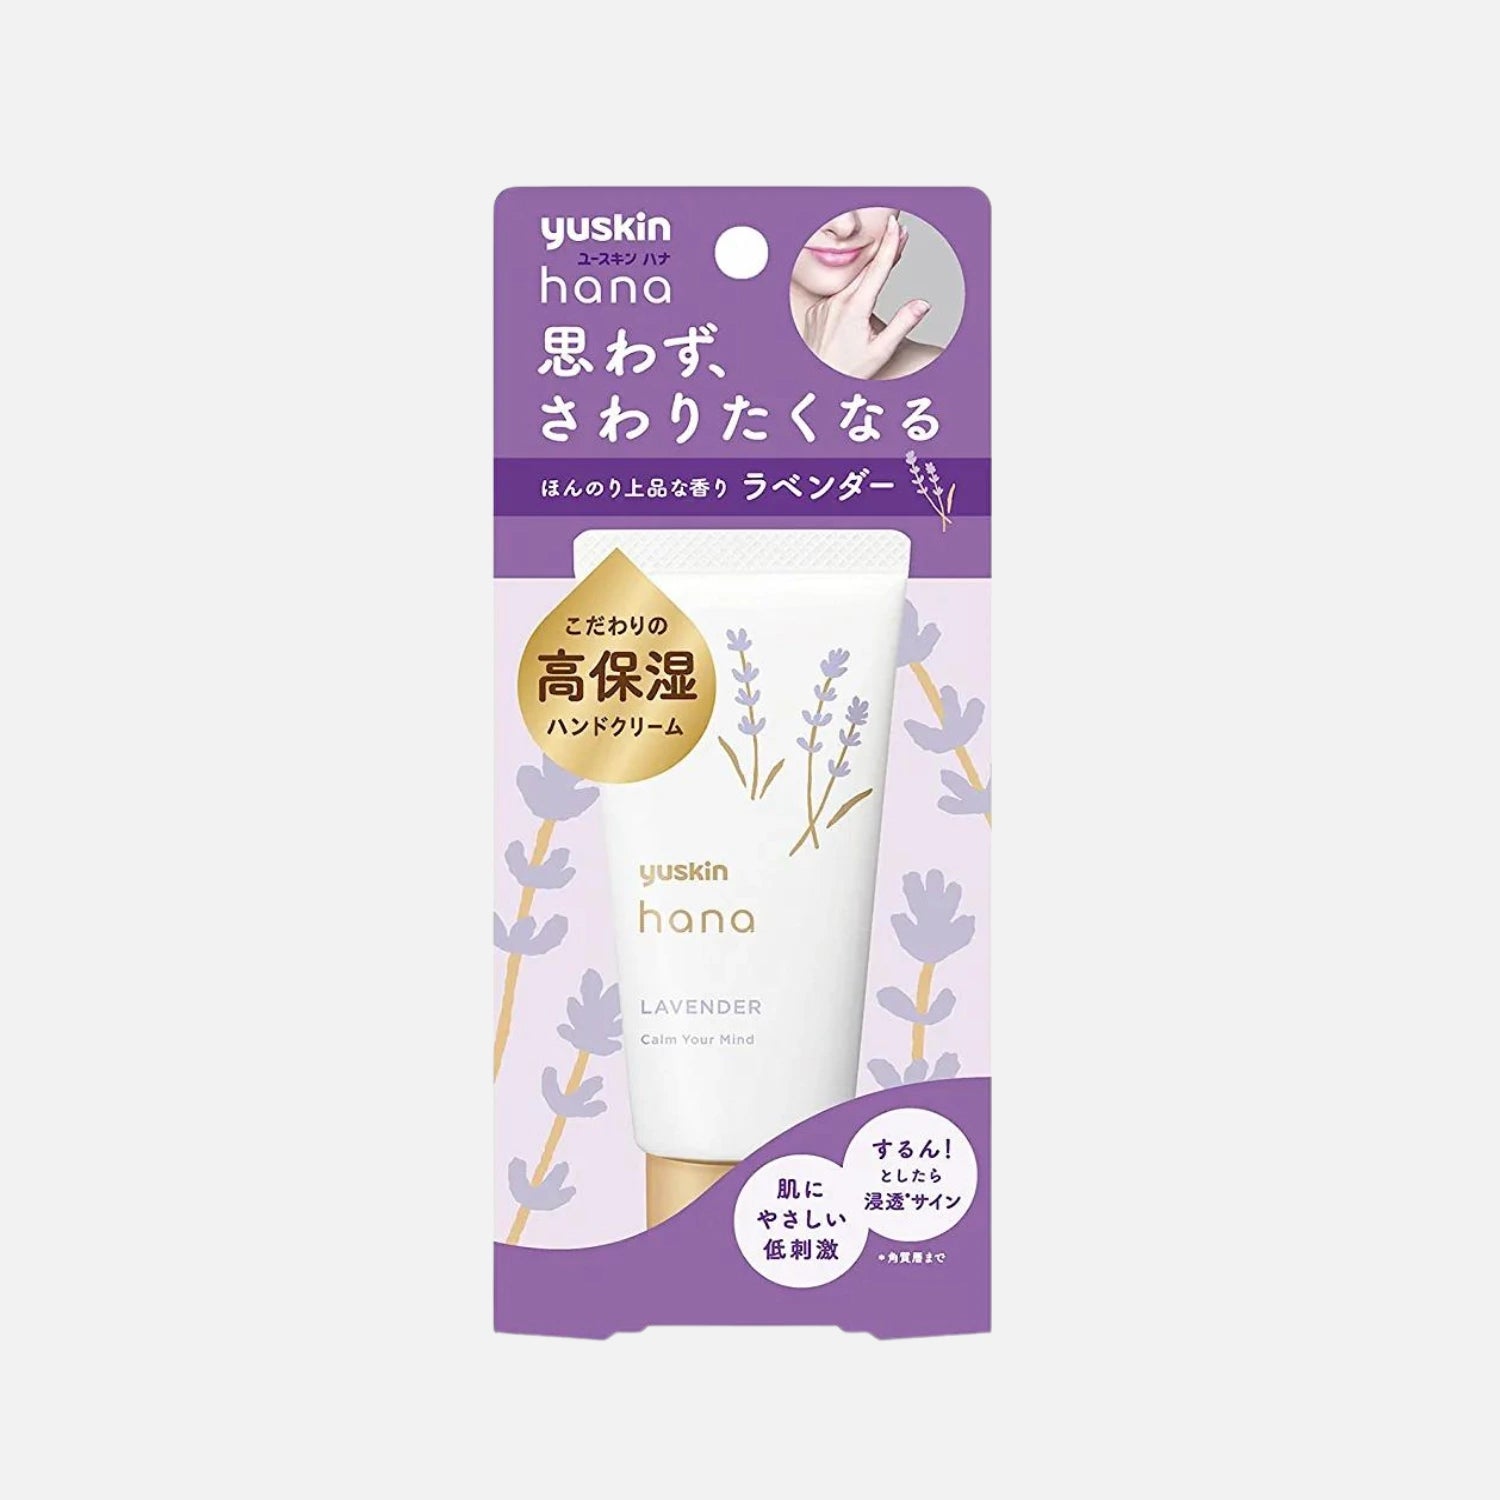 Yuskin Hana Hand Cream 50g - Buy Me Japan